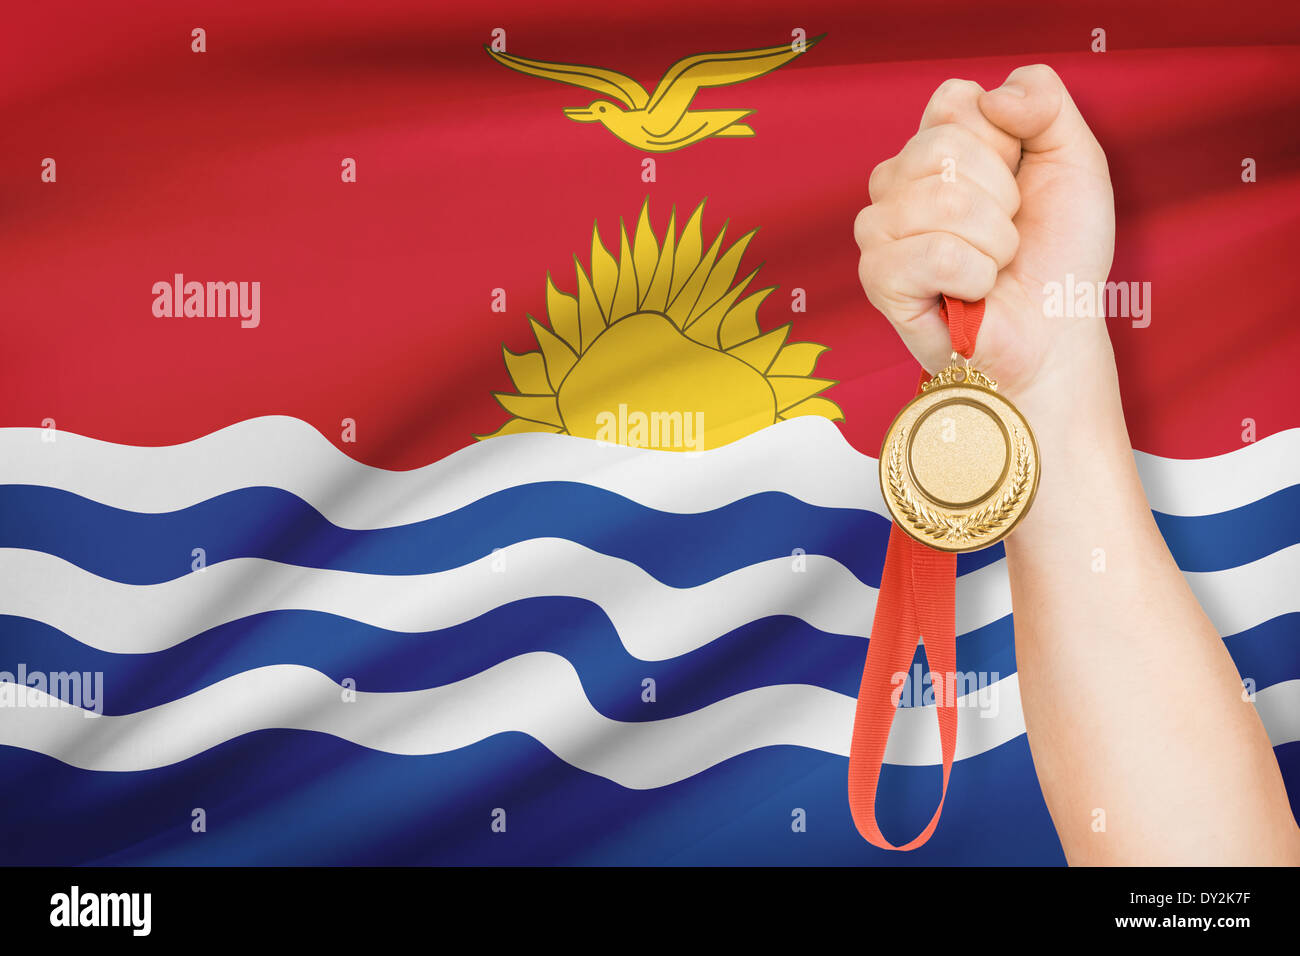 Sportsman holding gold medal with flag on background - Republic of Kiribati Stock Photo